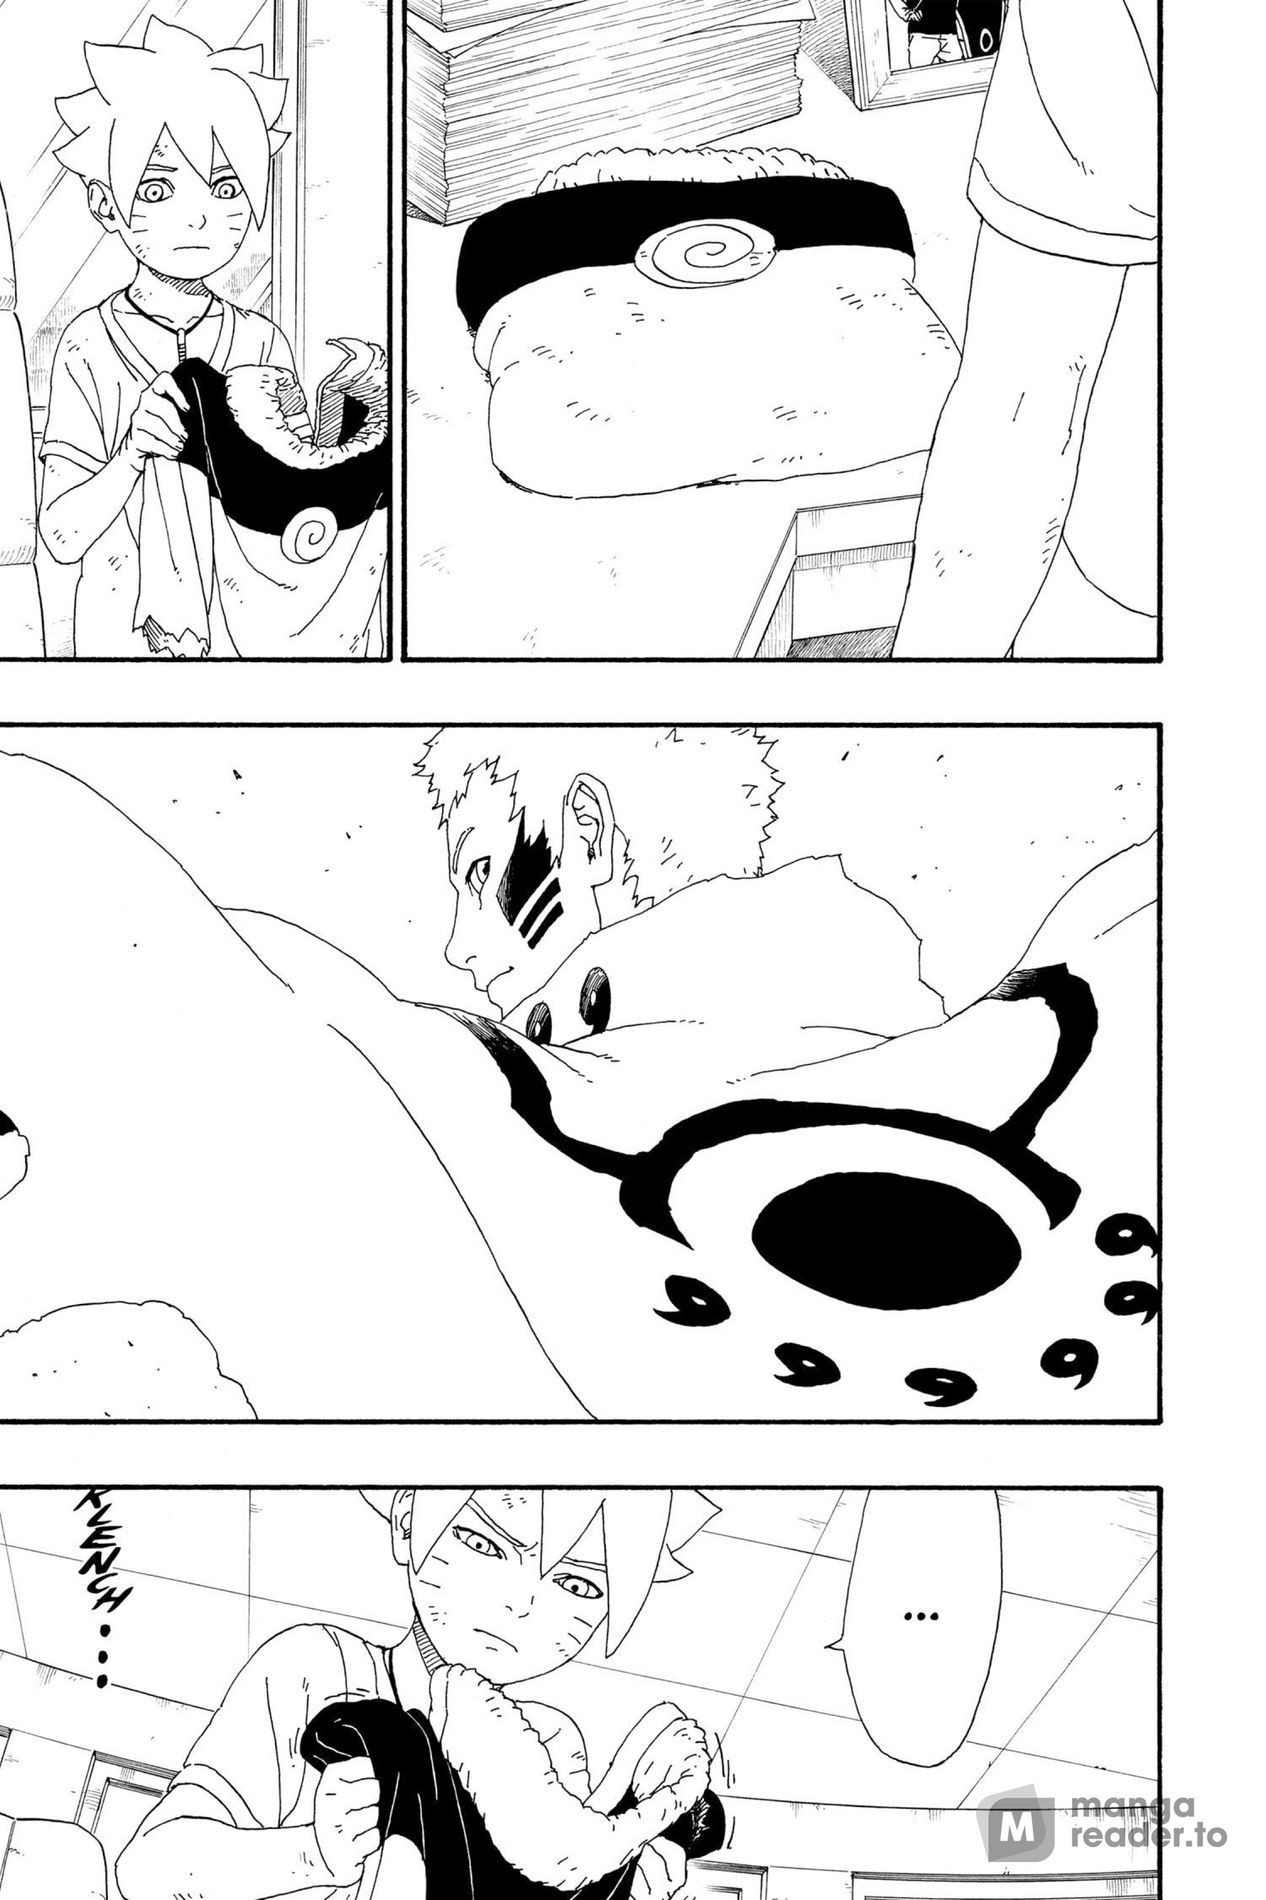 Boruto: Naruto Next Generations Capítulo 6 - Manga Online